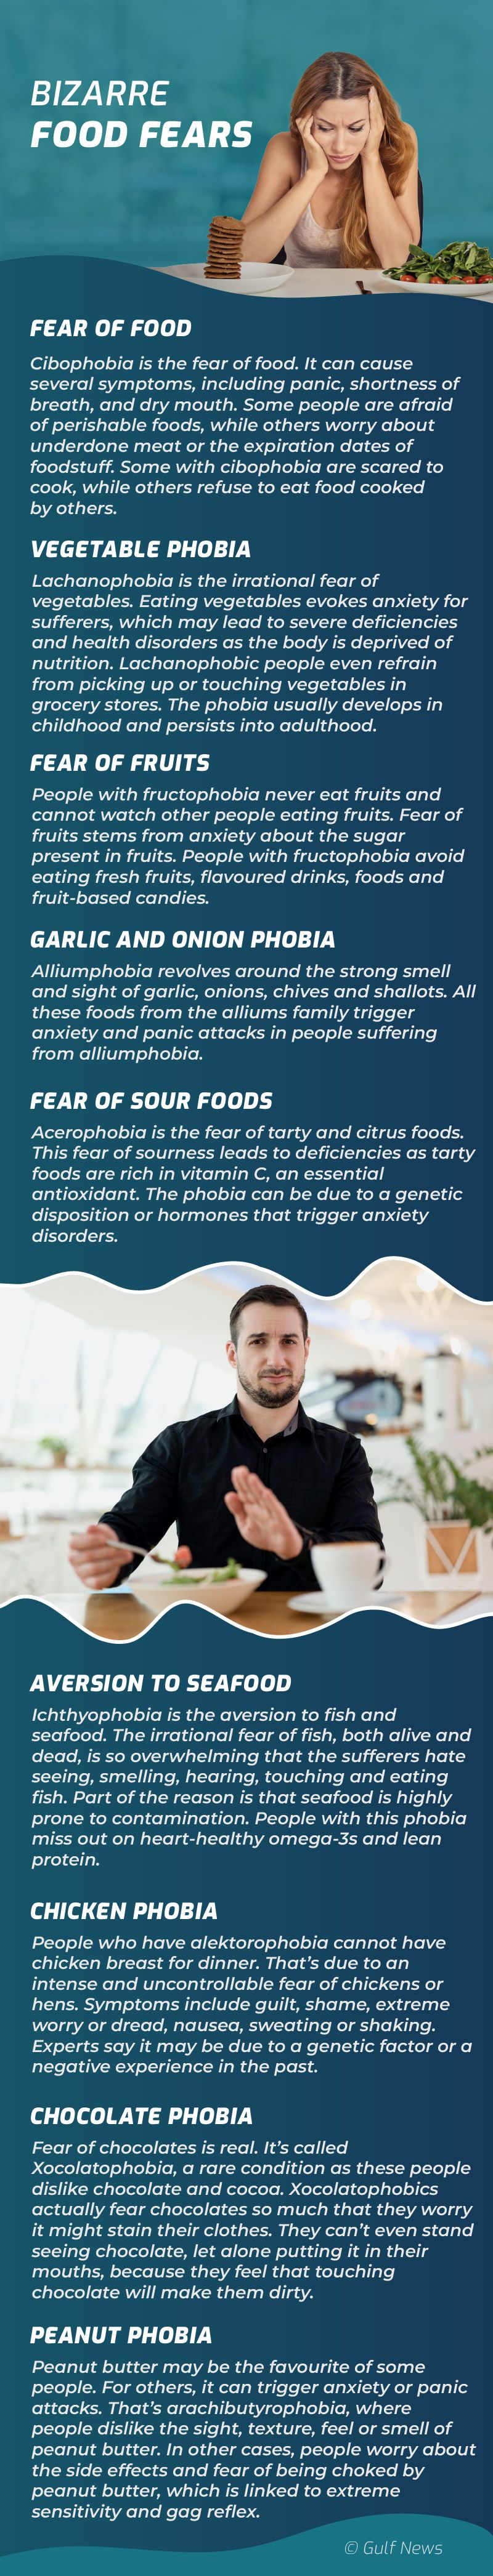 Food Phobia1